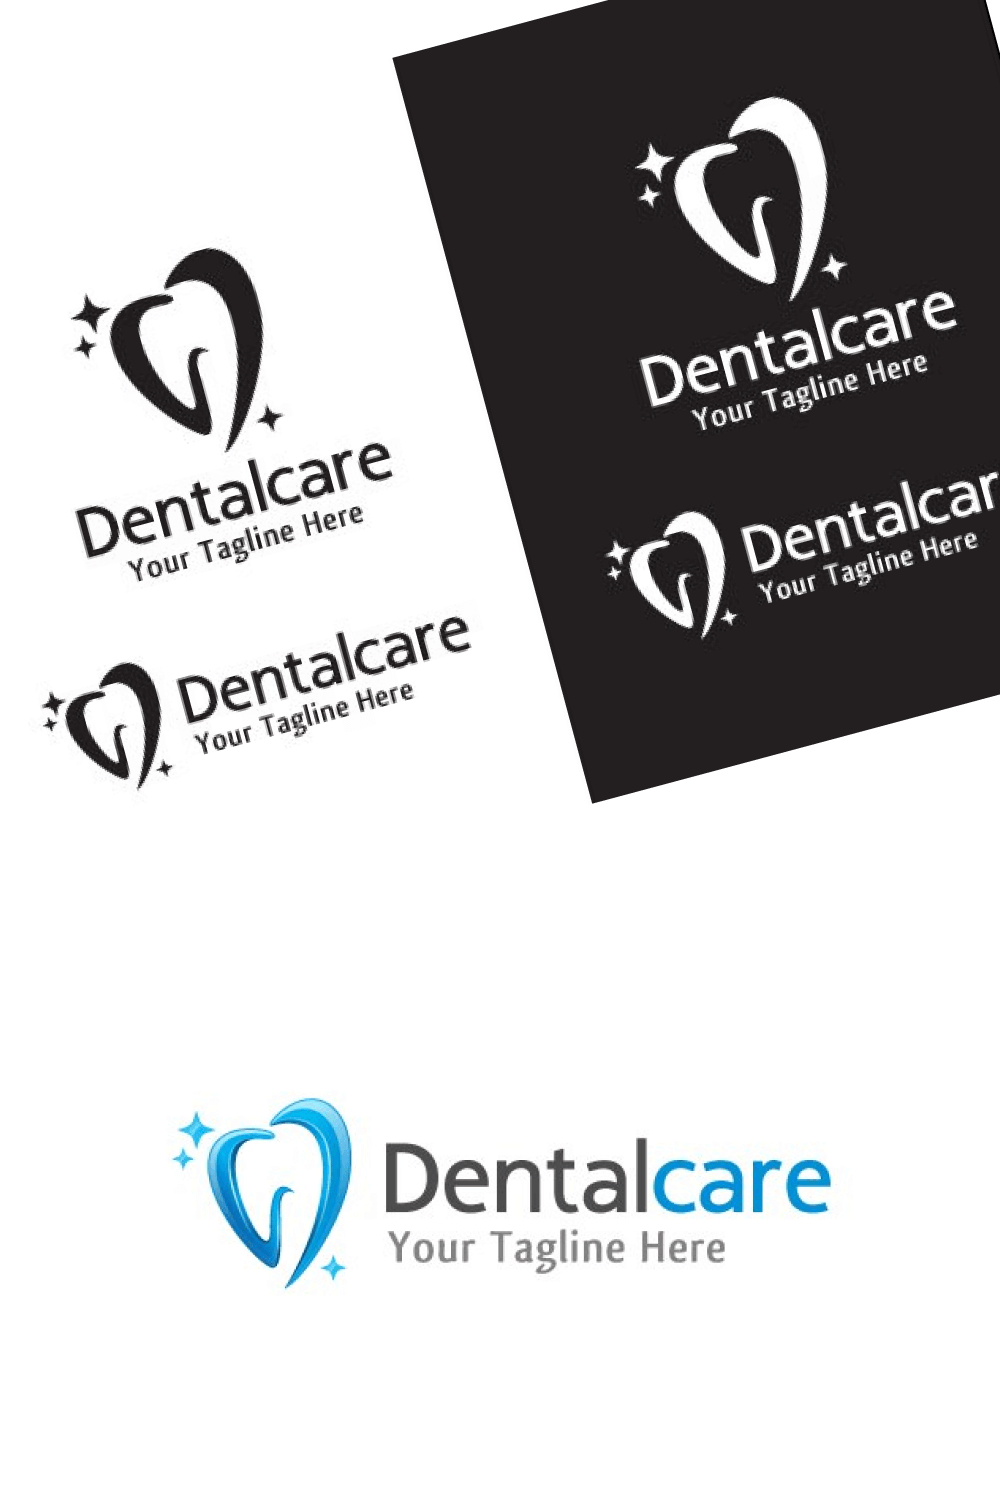 Diagonal Picture of Dentalcare.